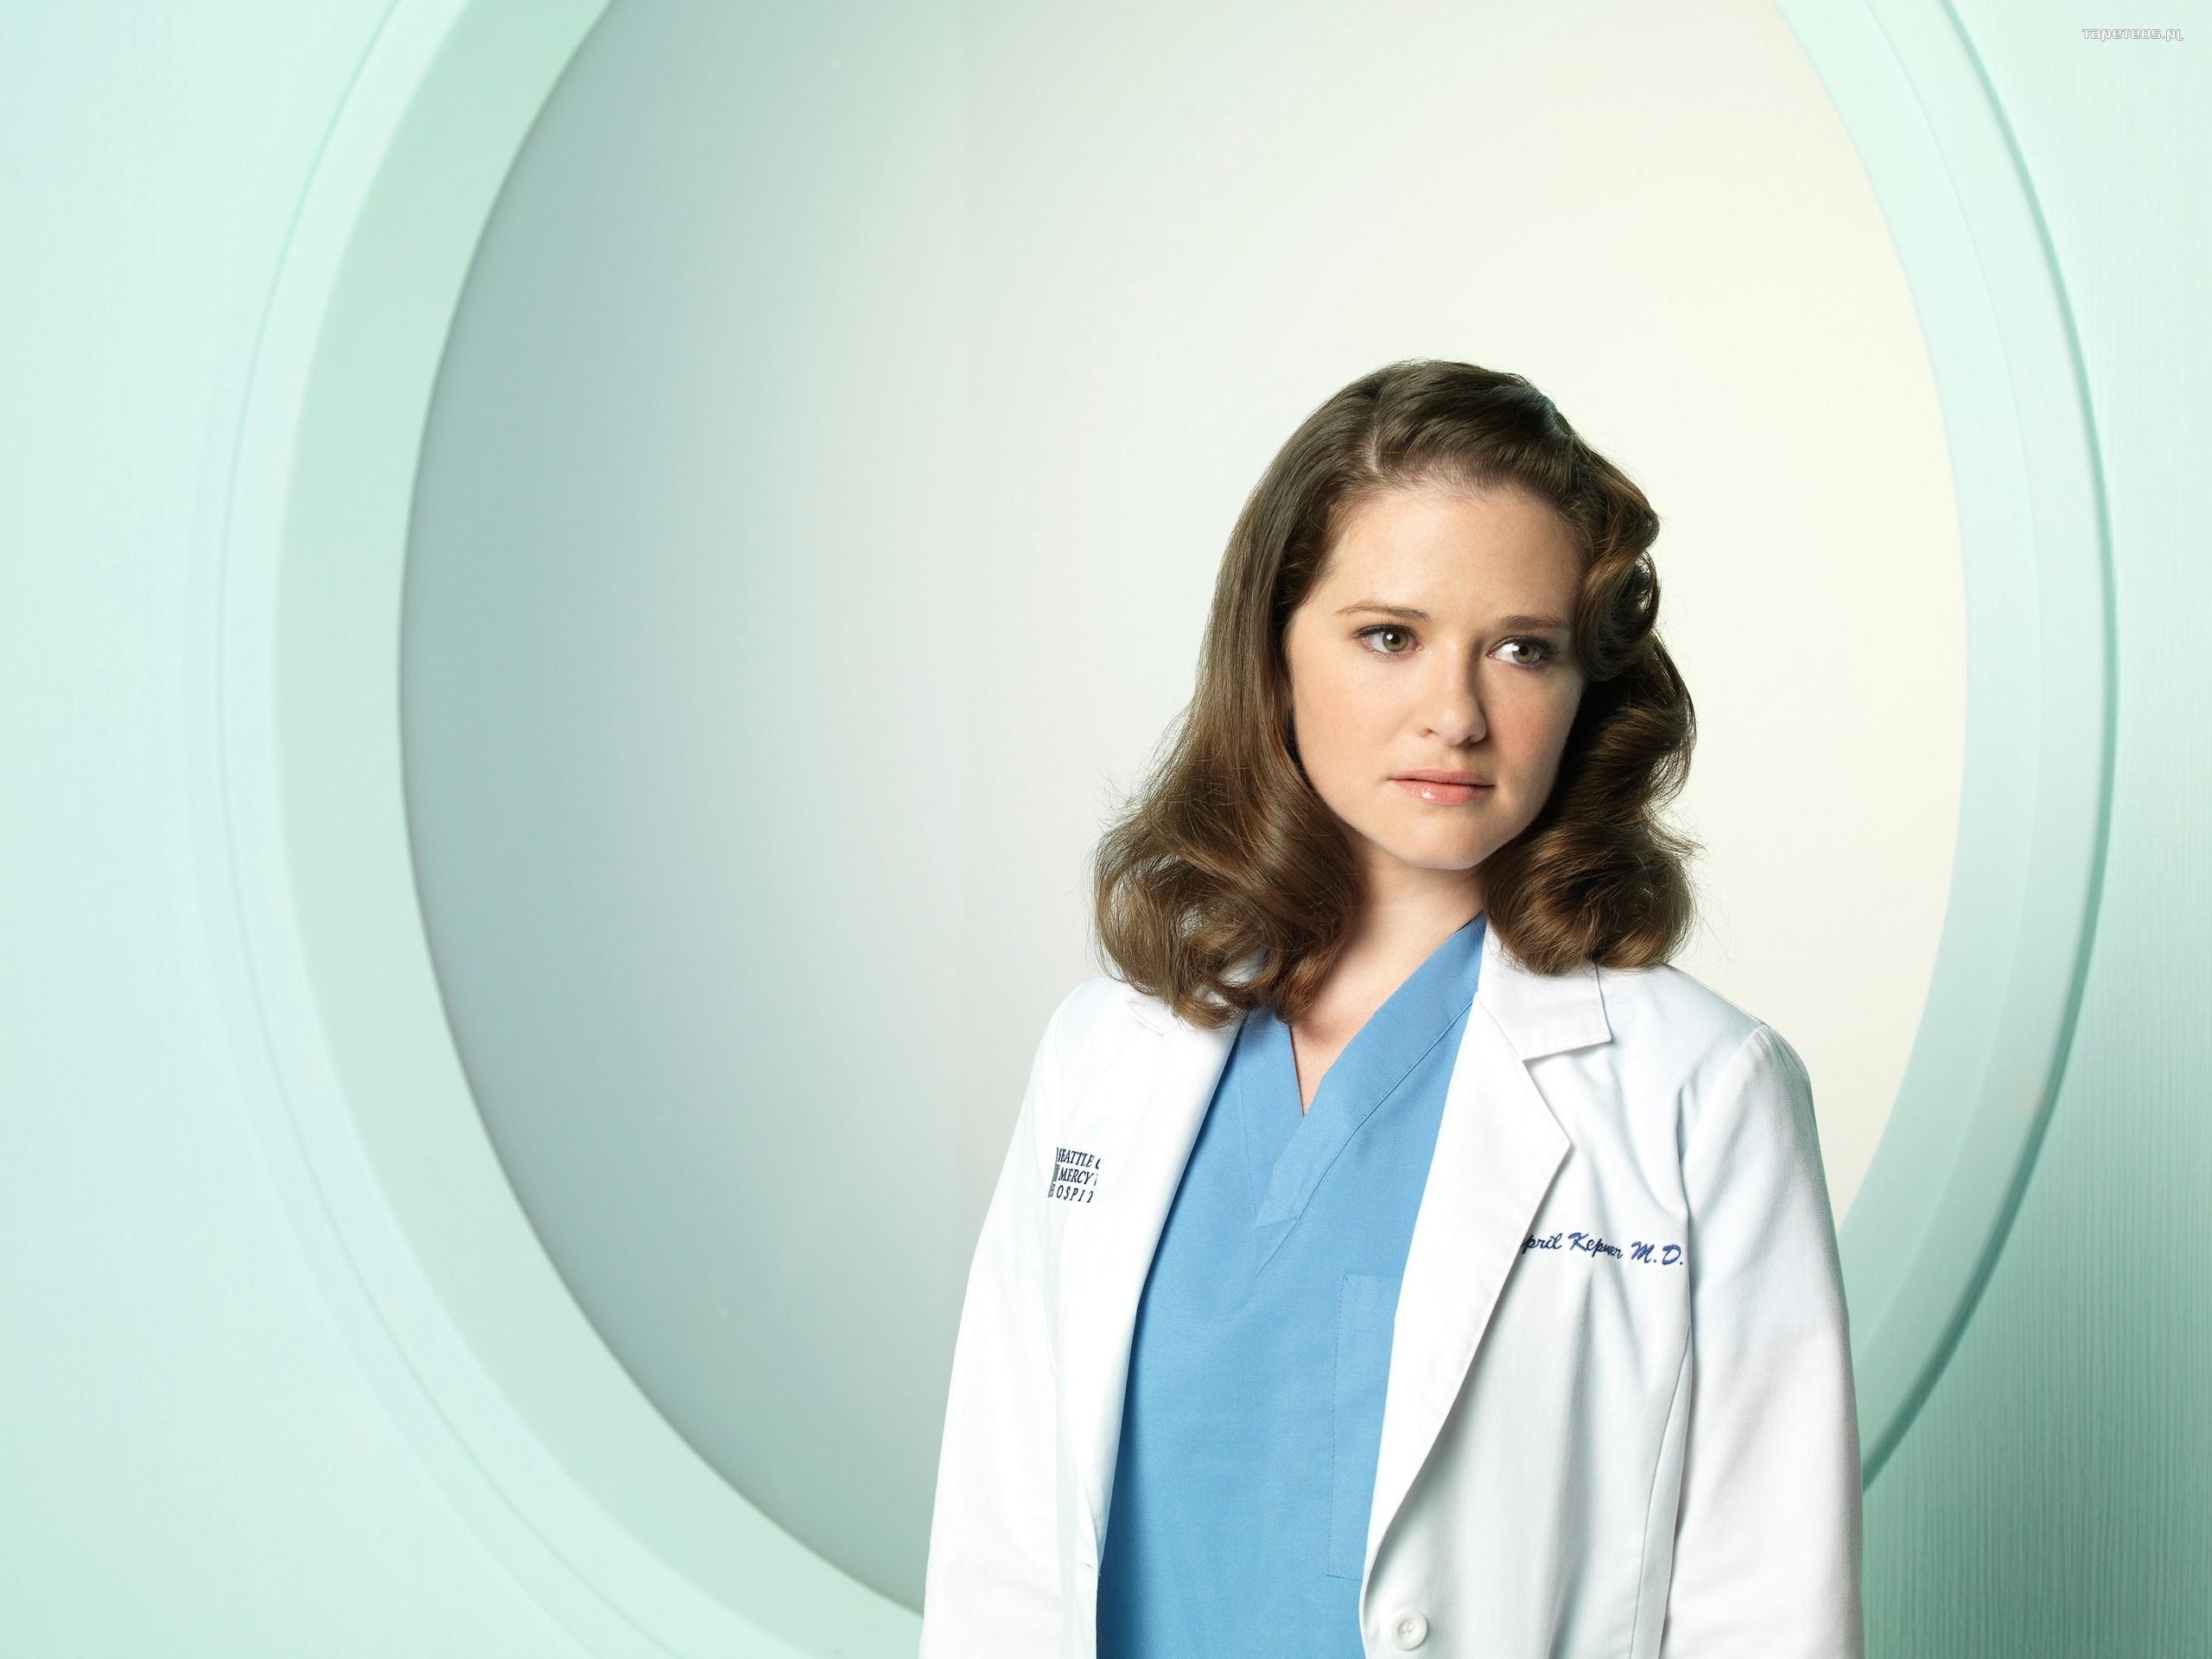 Chirurdzy, Greys Anatomy 011 Sarah Drew, Dr April Kepner